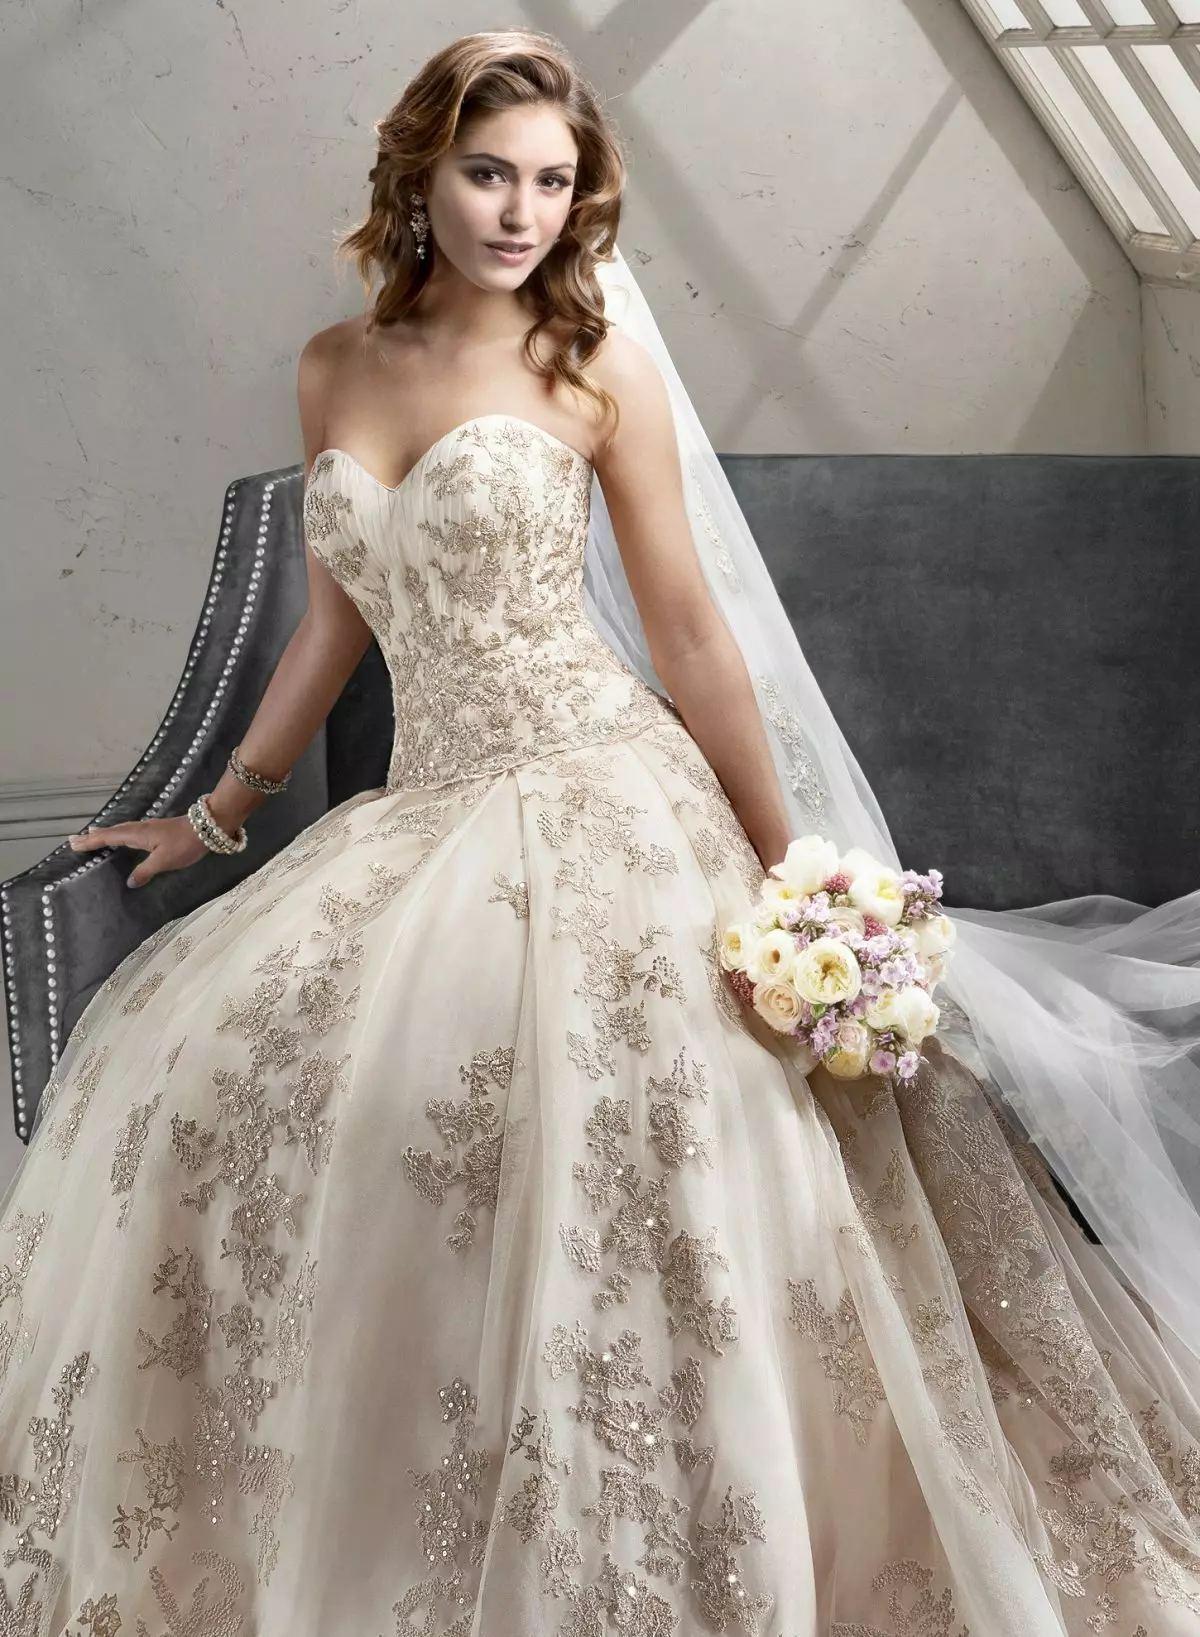 Wedding dress with rhinestones